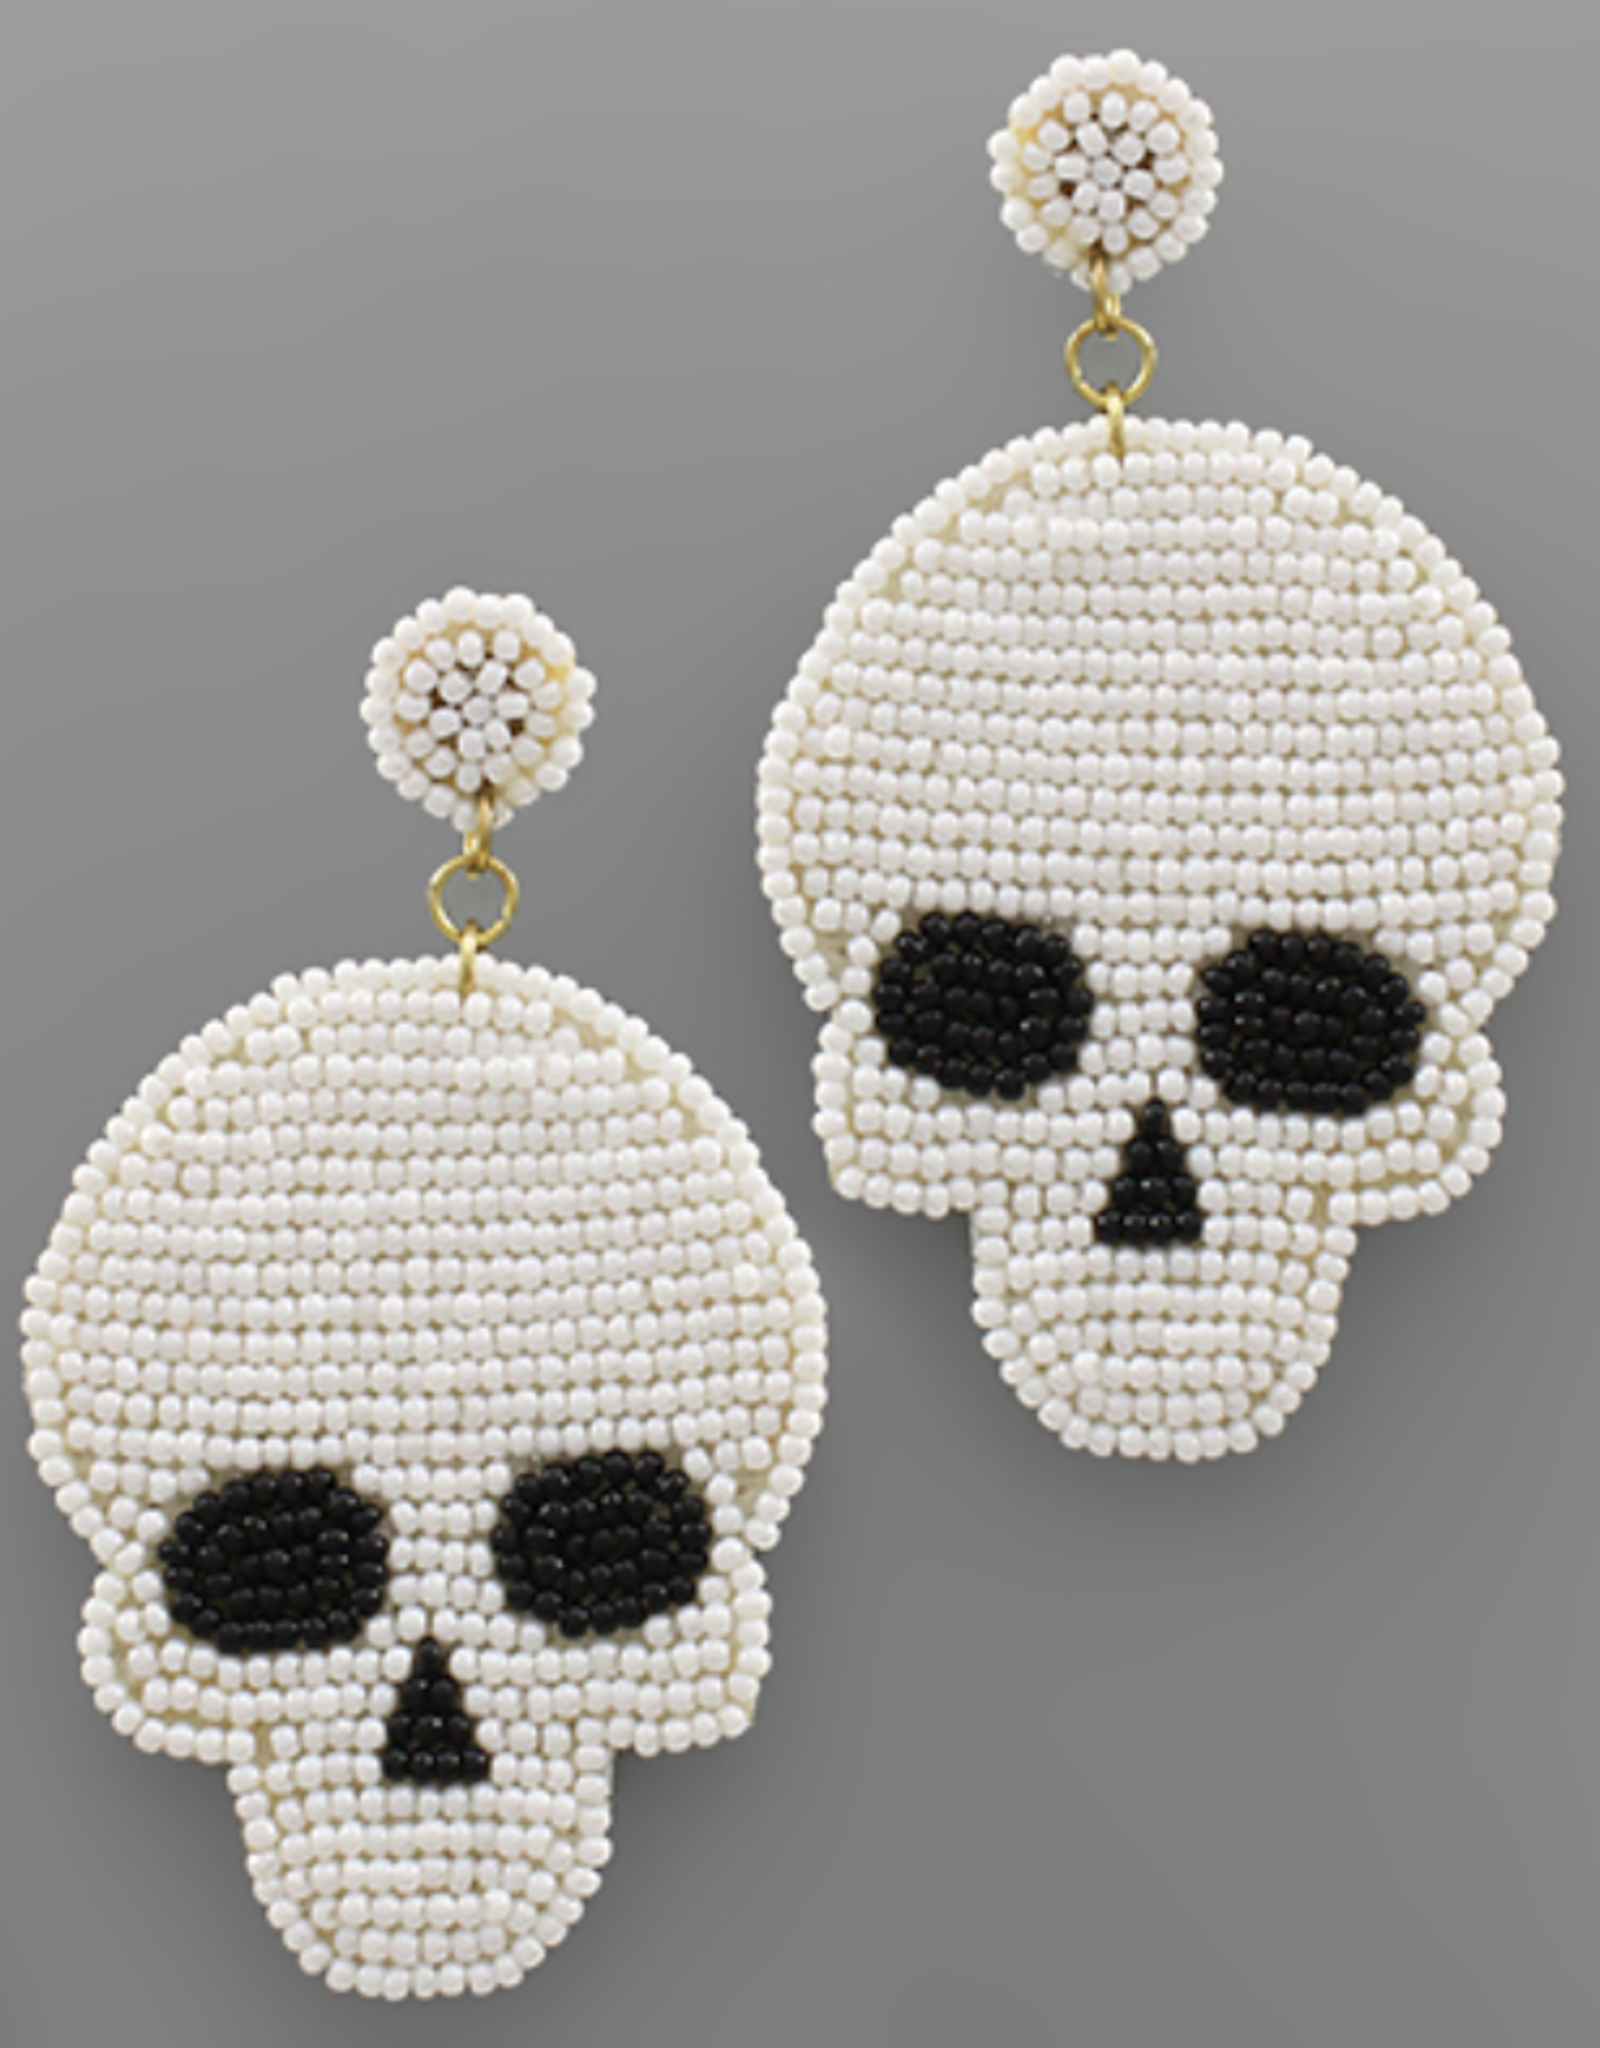 Skull Bead Earrings